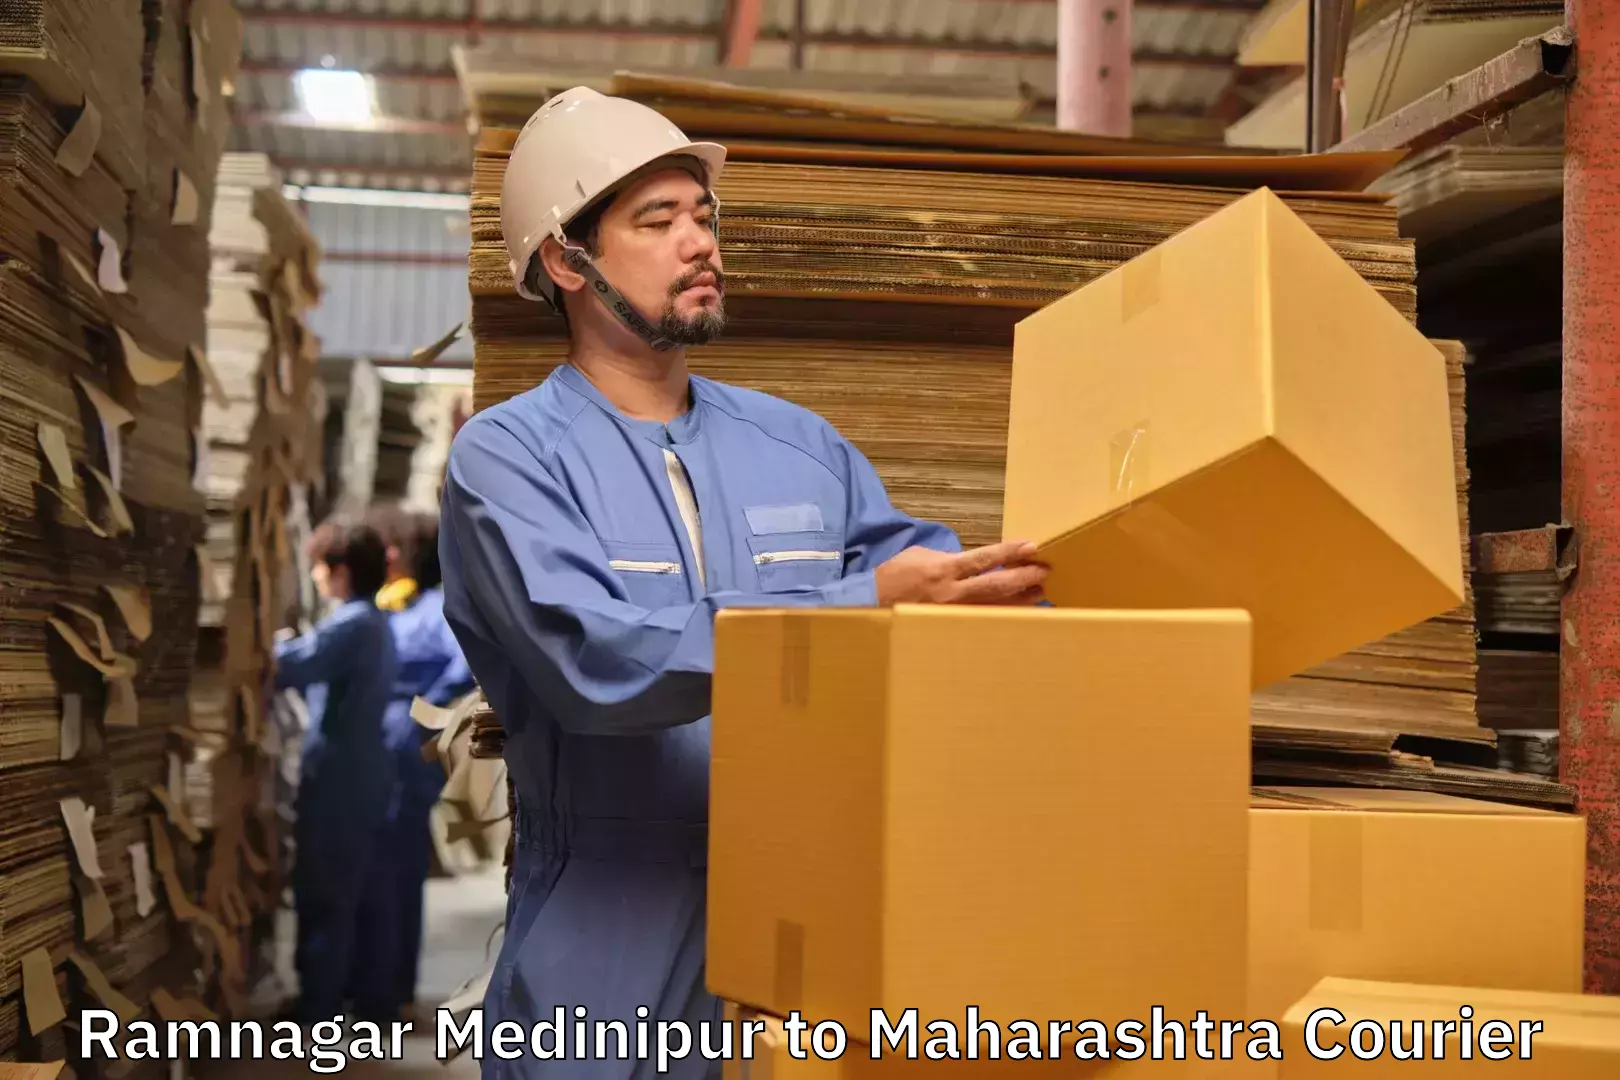 Baggage shipping experts Ramnagar Medinipur to Dahanu